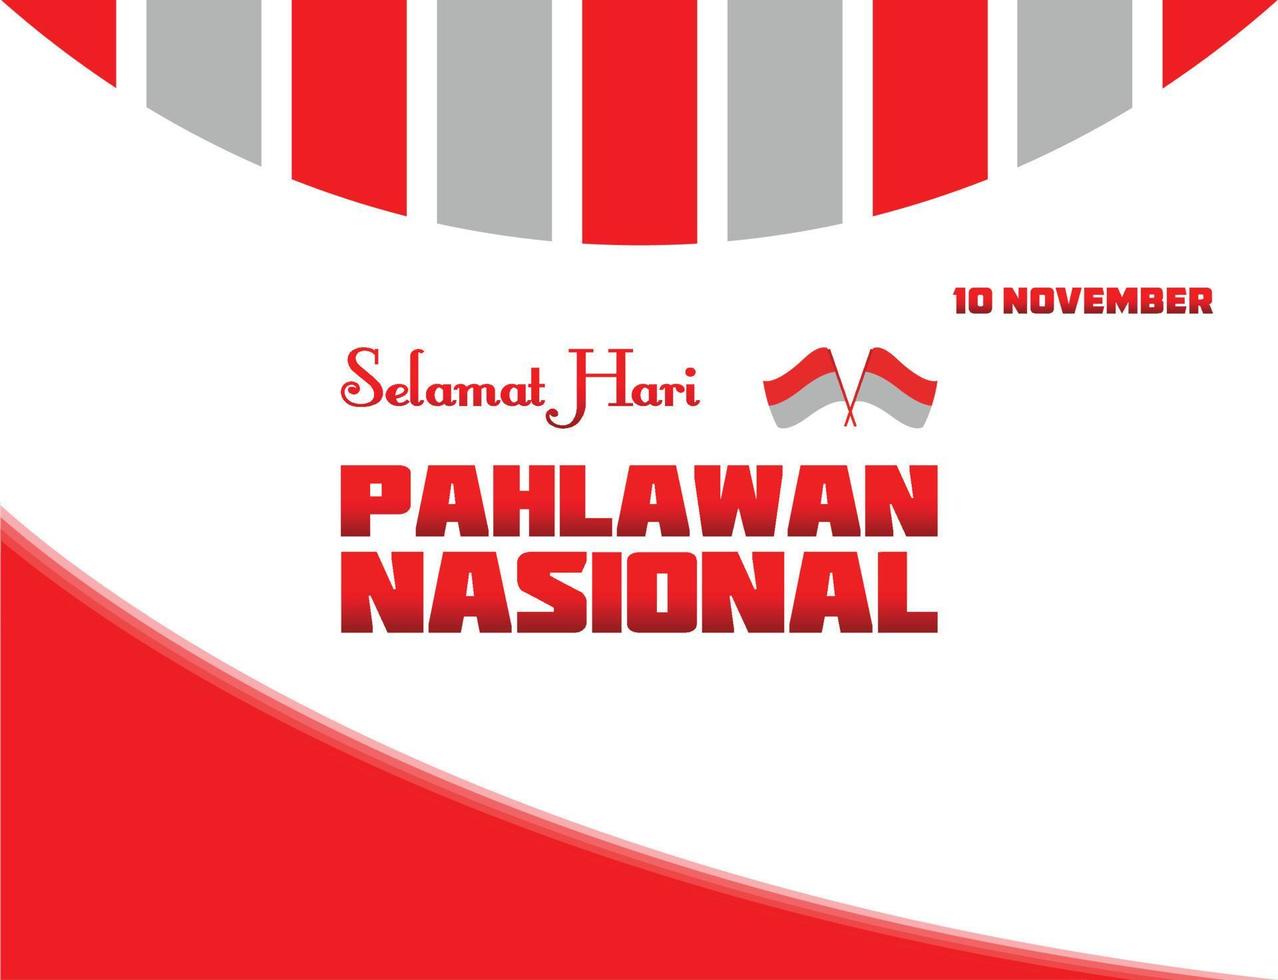 Selamat hari pahlawan nasional. Translation Happy Indonesian National Heroes day. vector